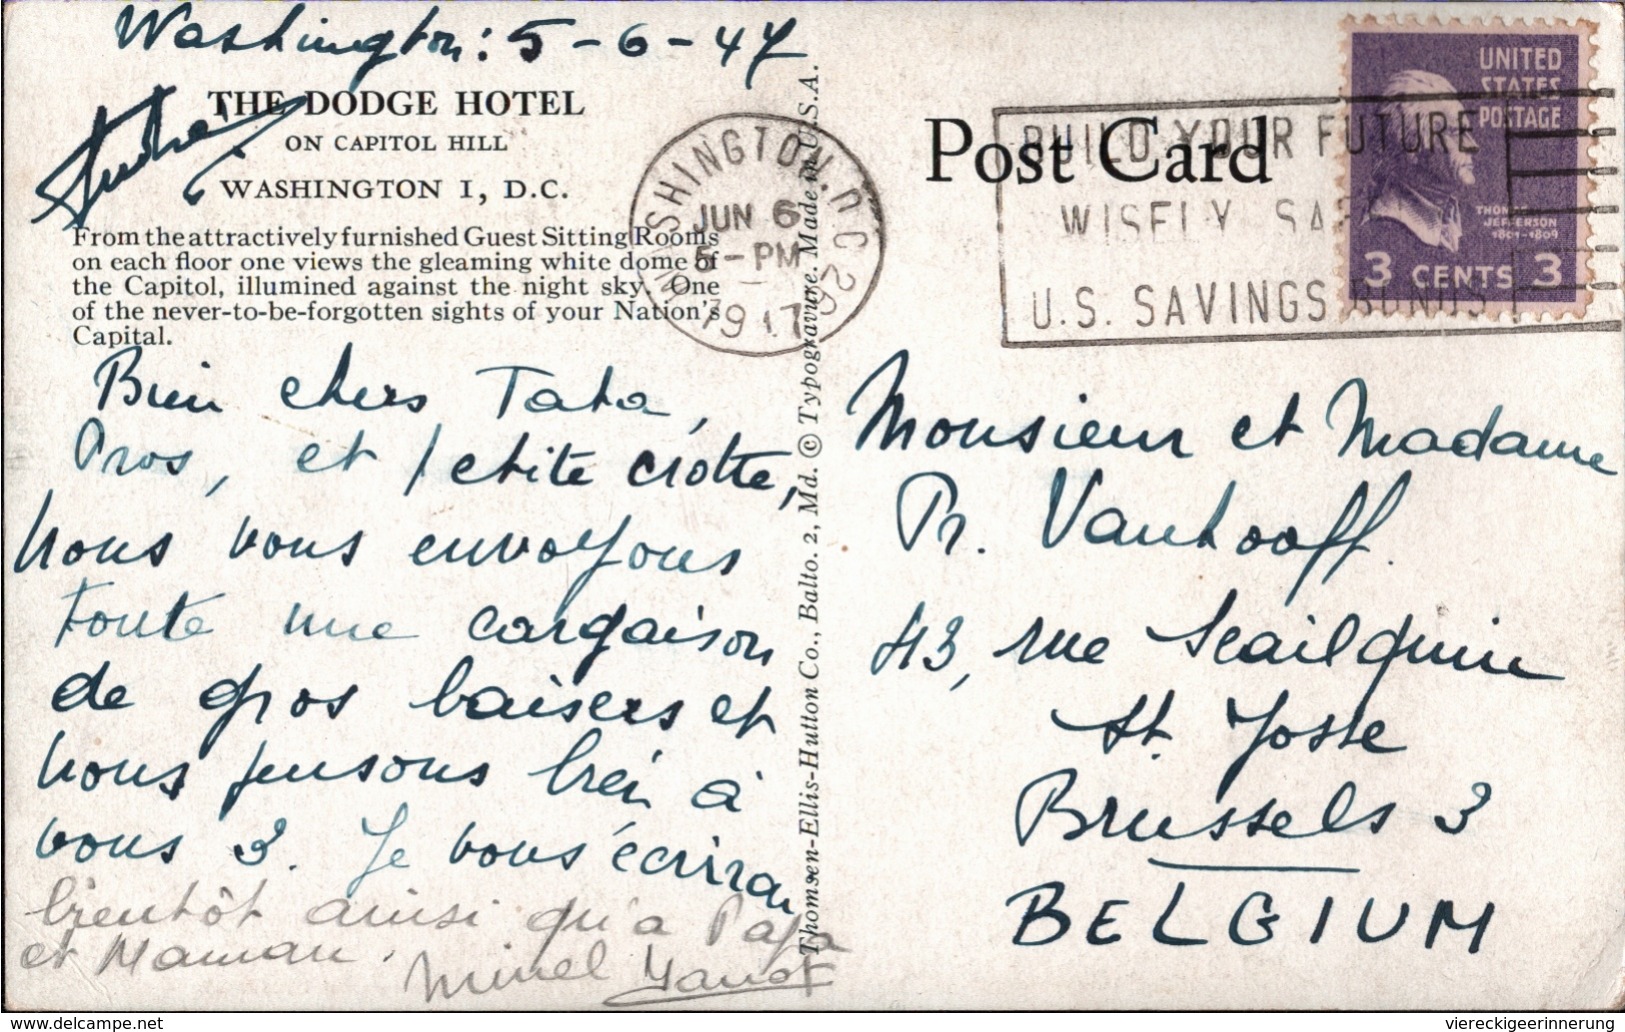 ! Postcard Washington, The Dodge Hotel, 1947 - Washington DC